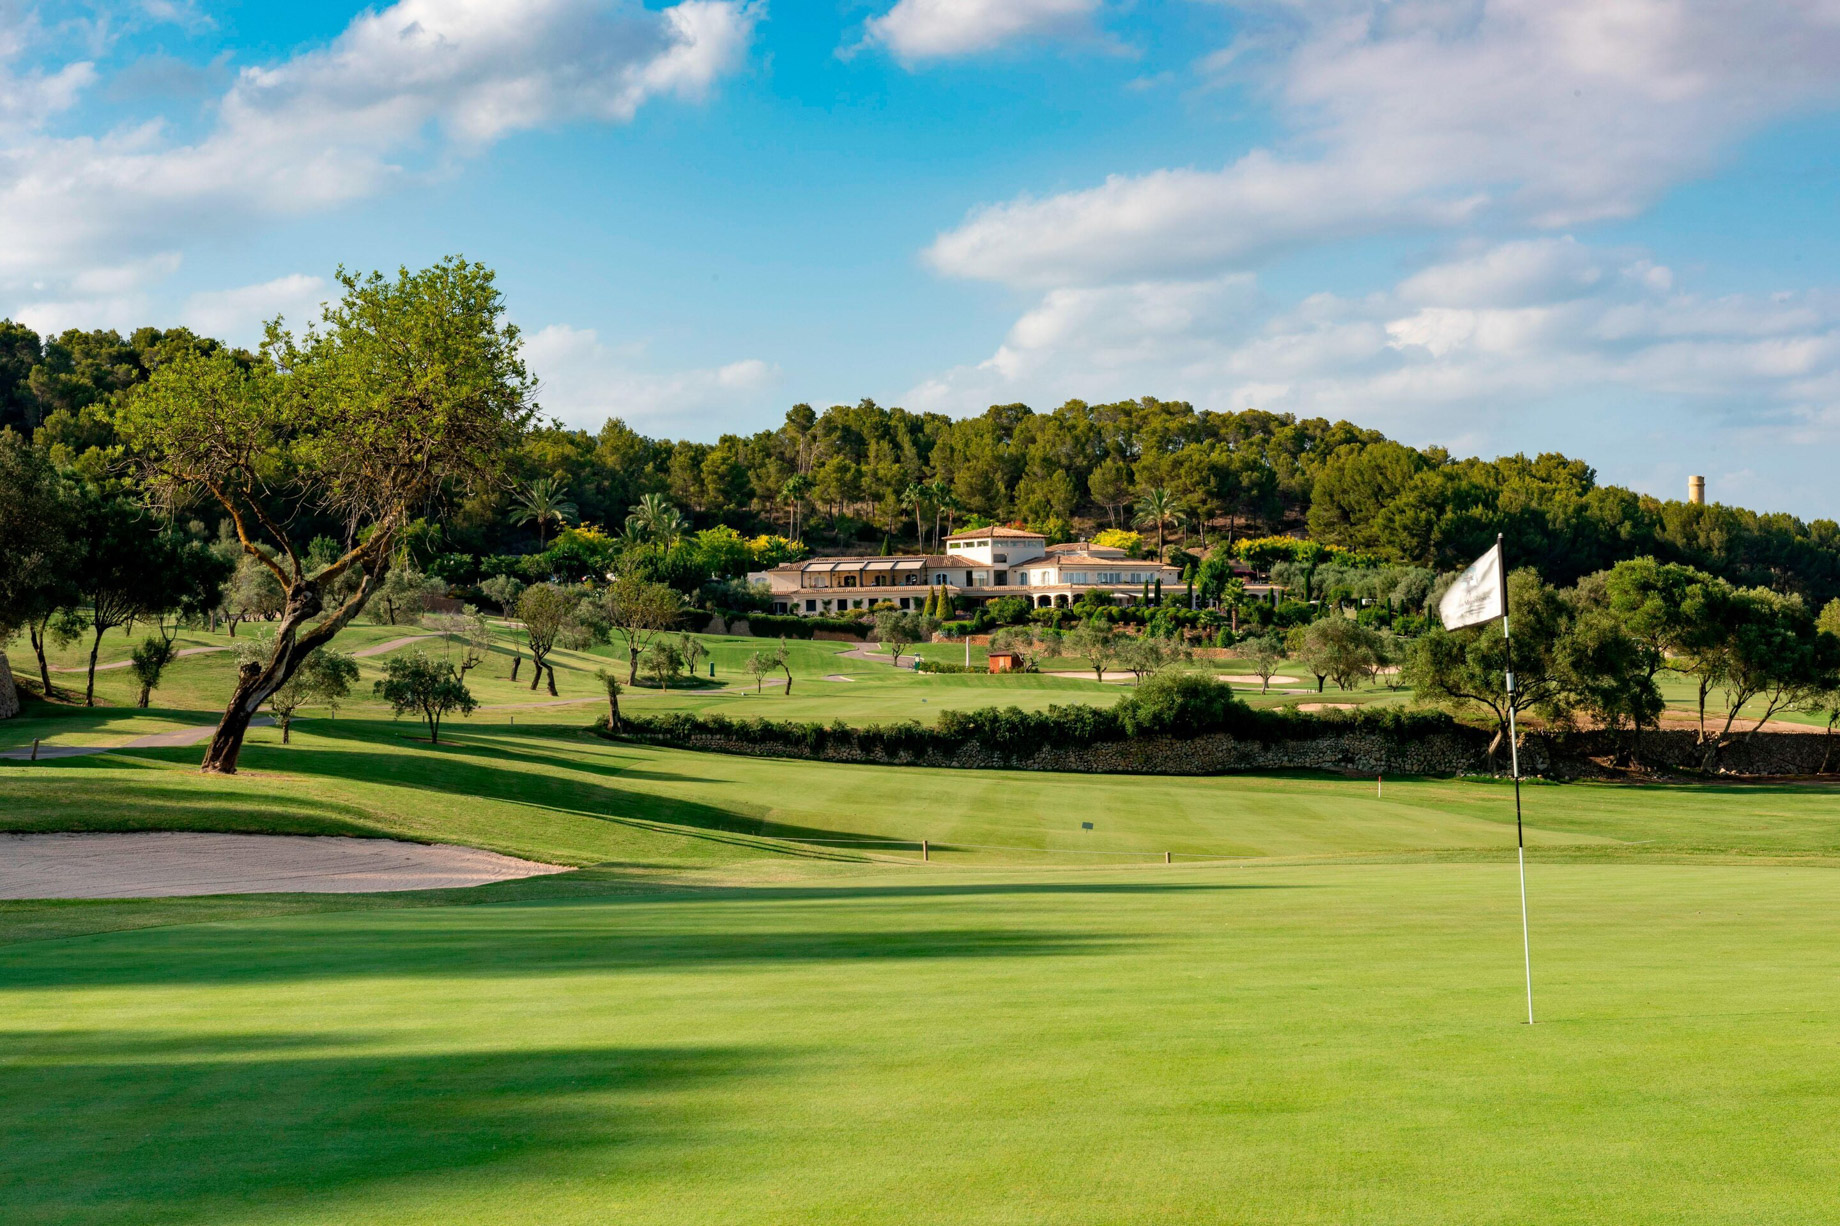 The St. Regis Mardavall Mallorca Resort - Palma de Mallorca, Spain - Golf Son Muntaner View